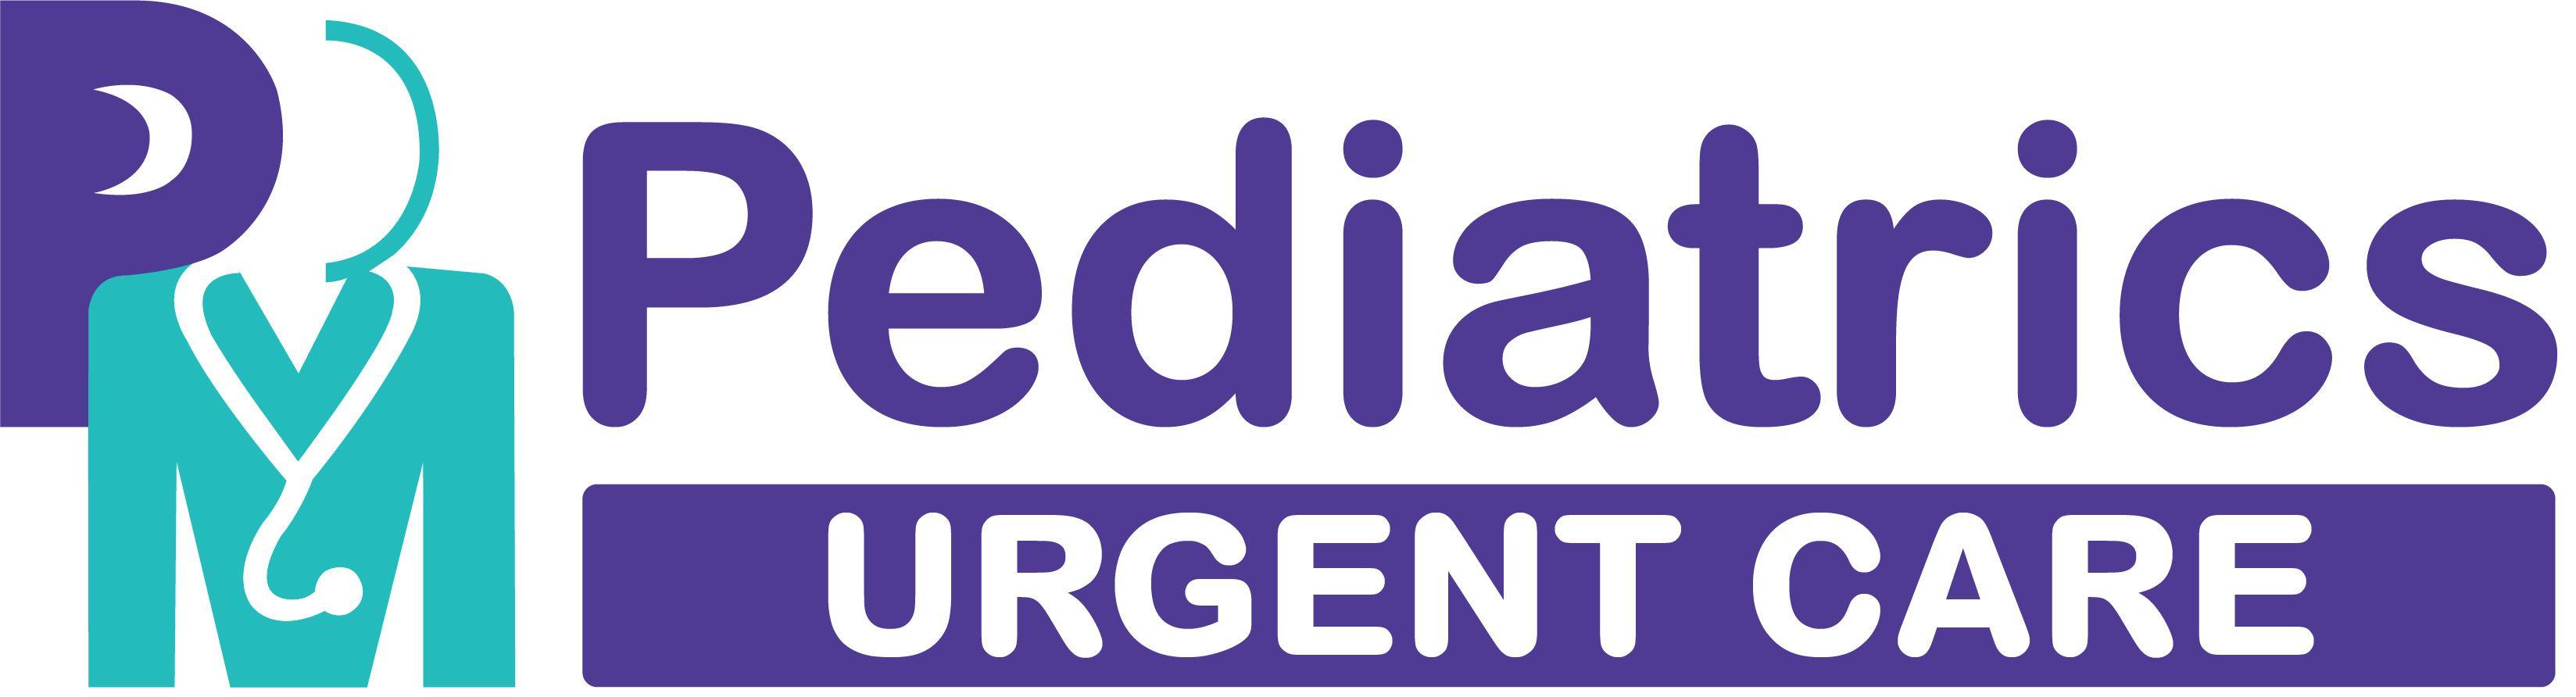 Pediatrics Logo - PM Pediatrics. Urgent Care for Kids of All Ages